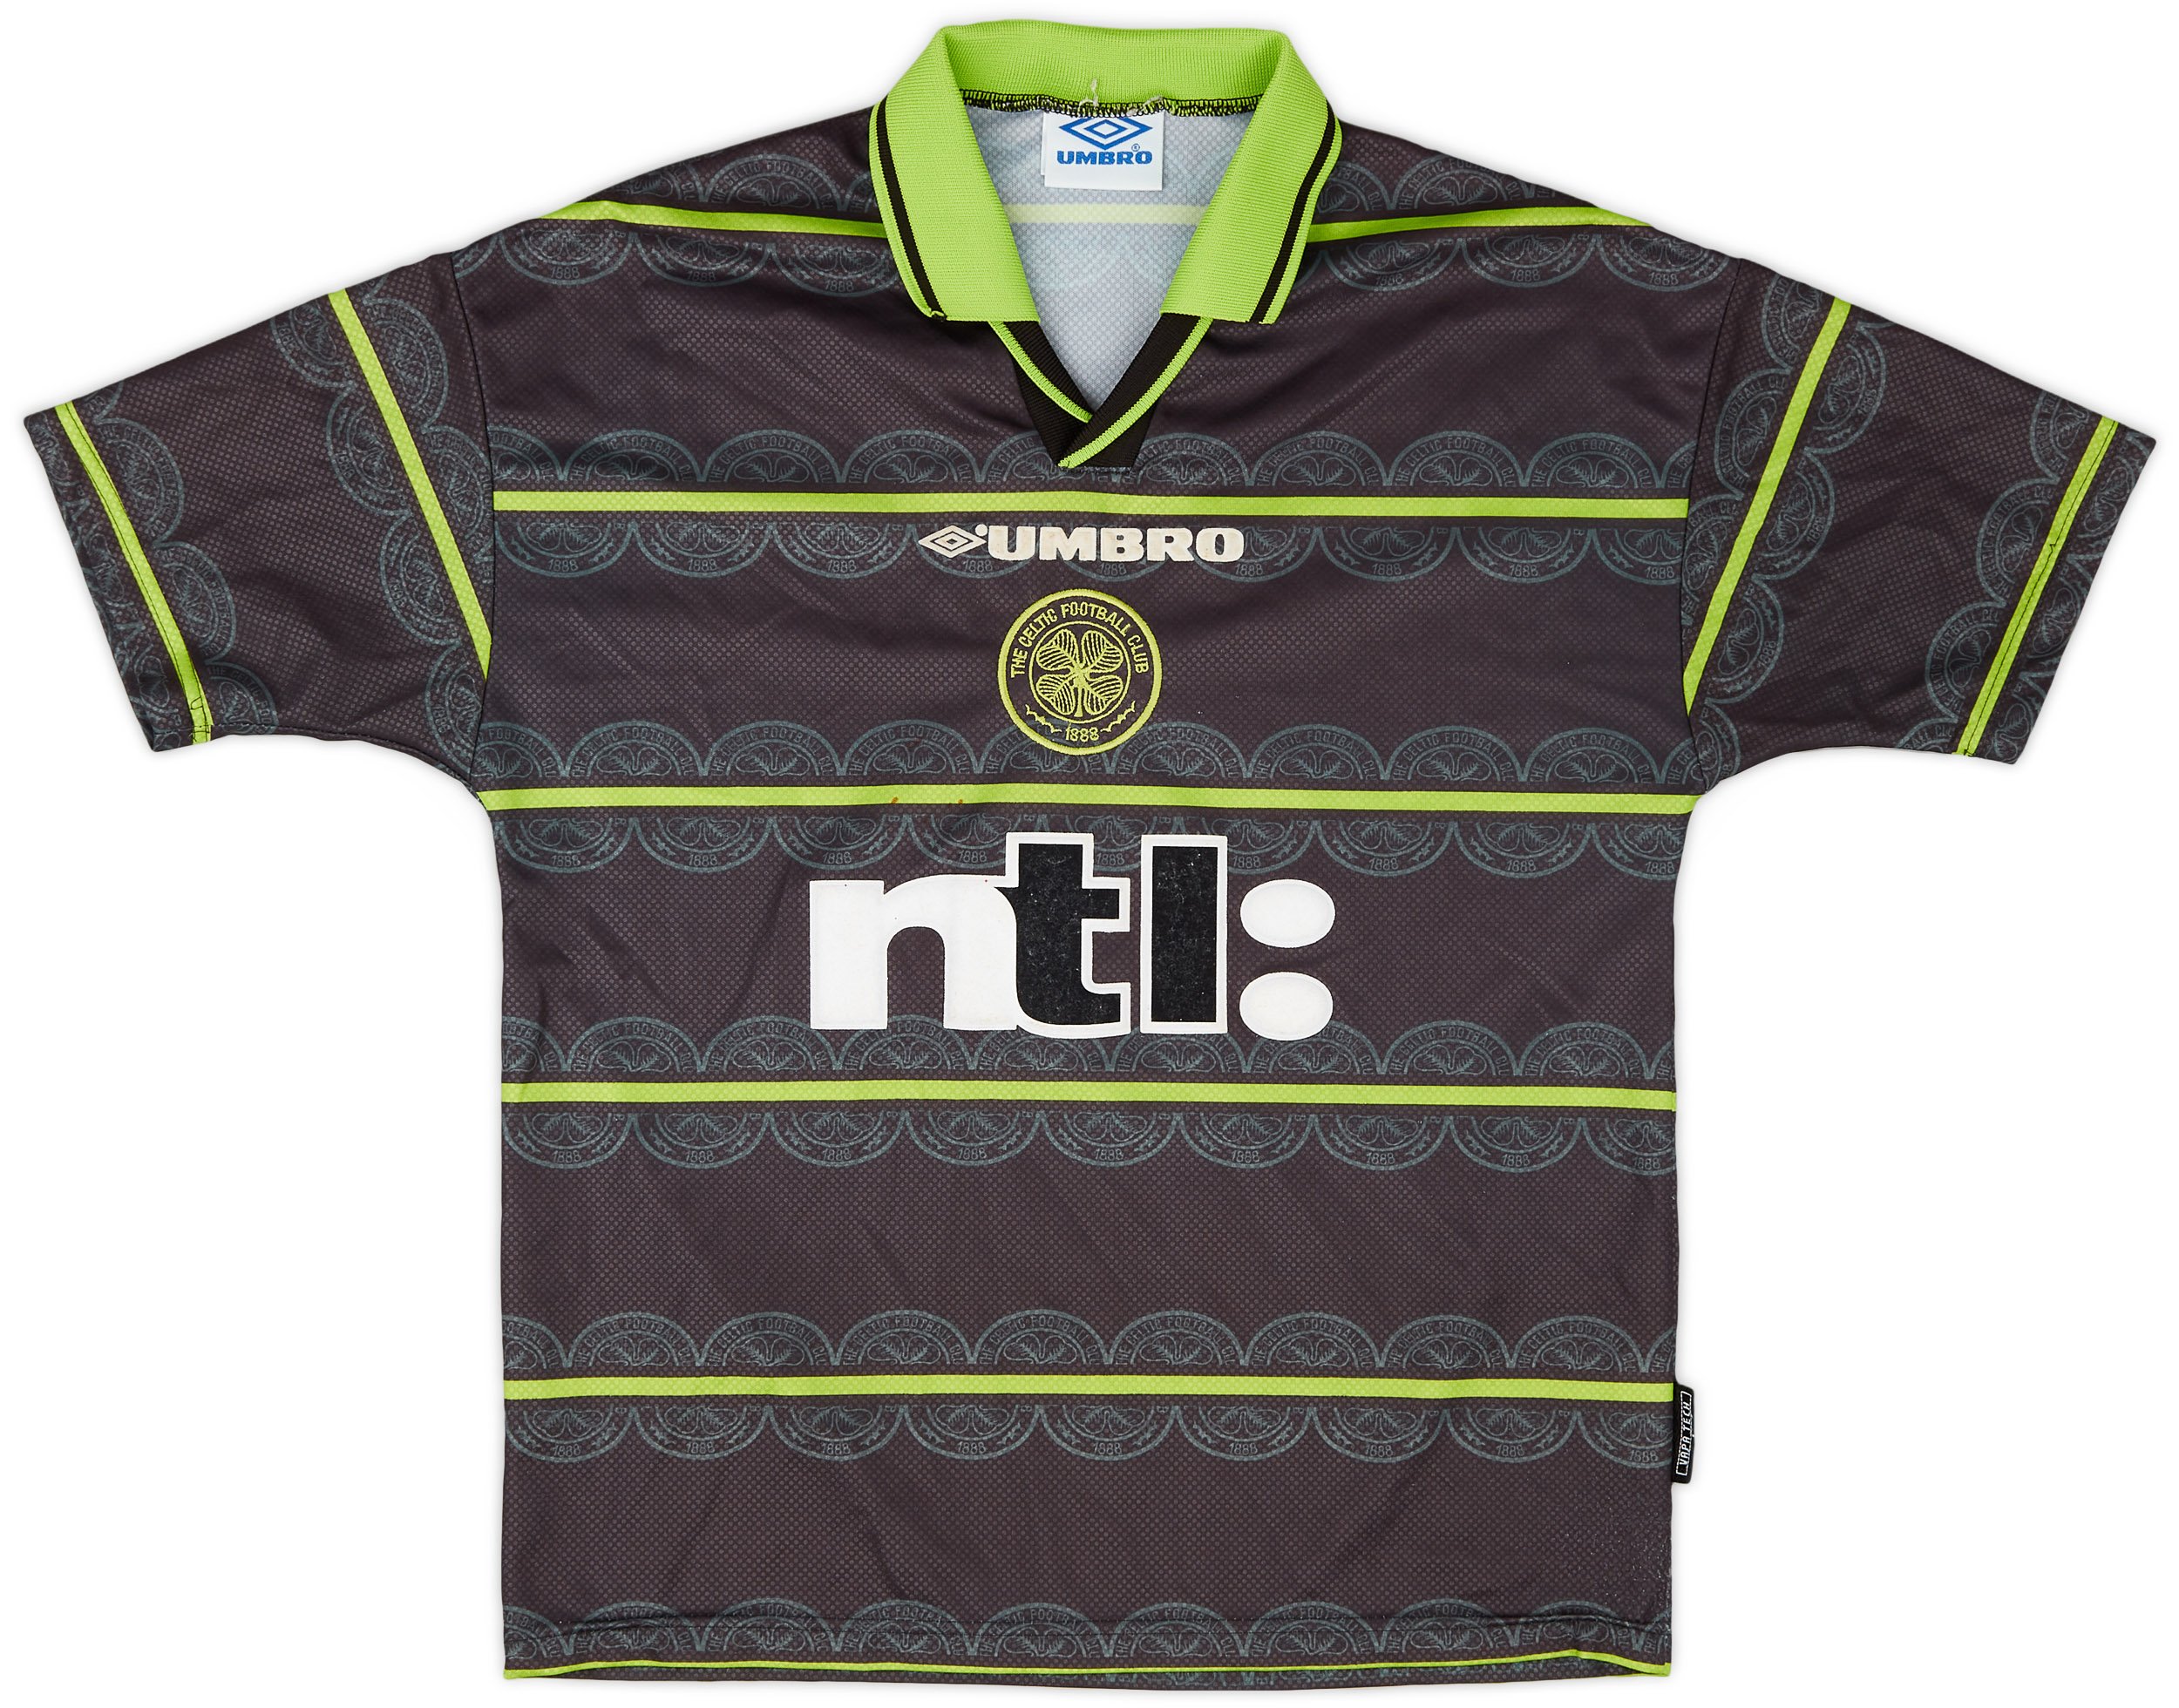 celtic 1999 kit